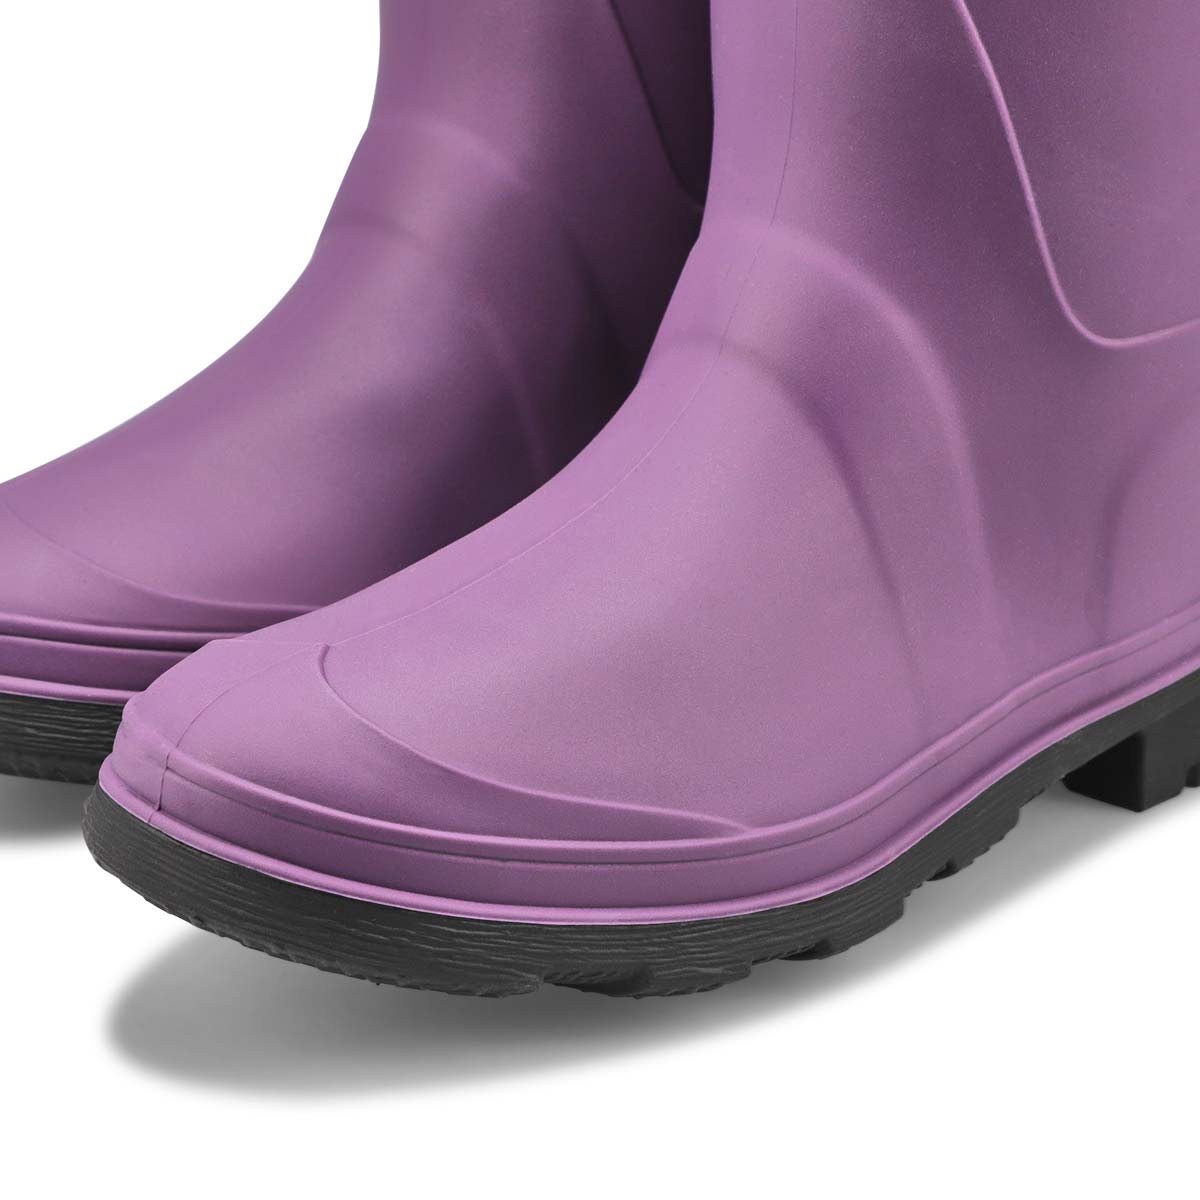 Girls' Raindrops Waterproof Rain Boot - Eggplant